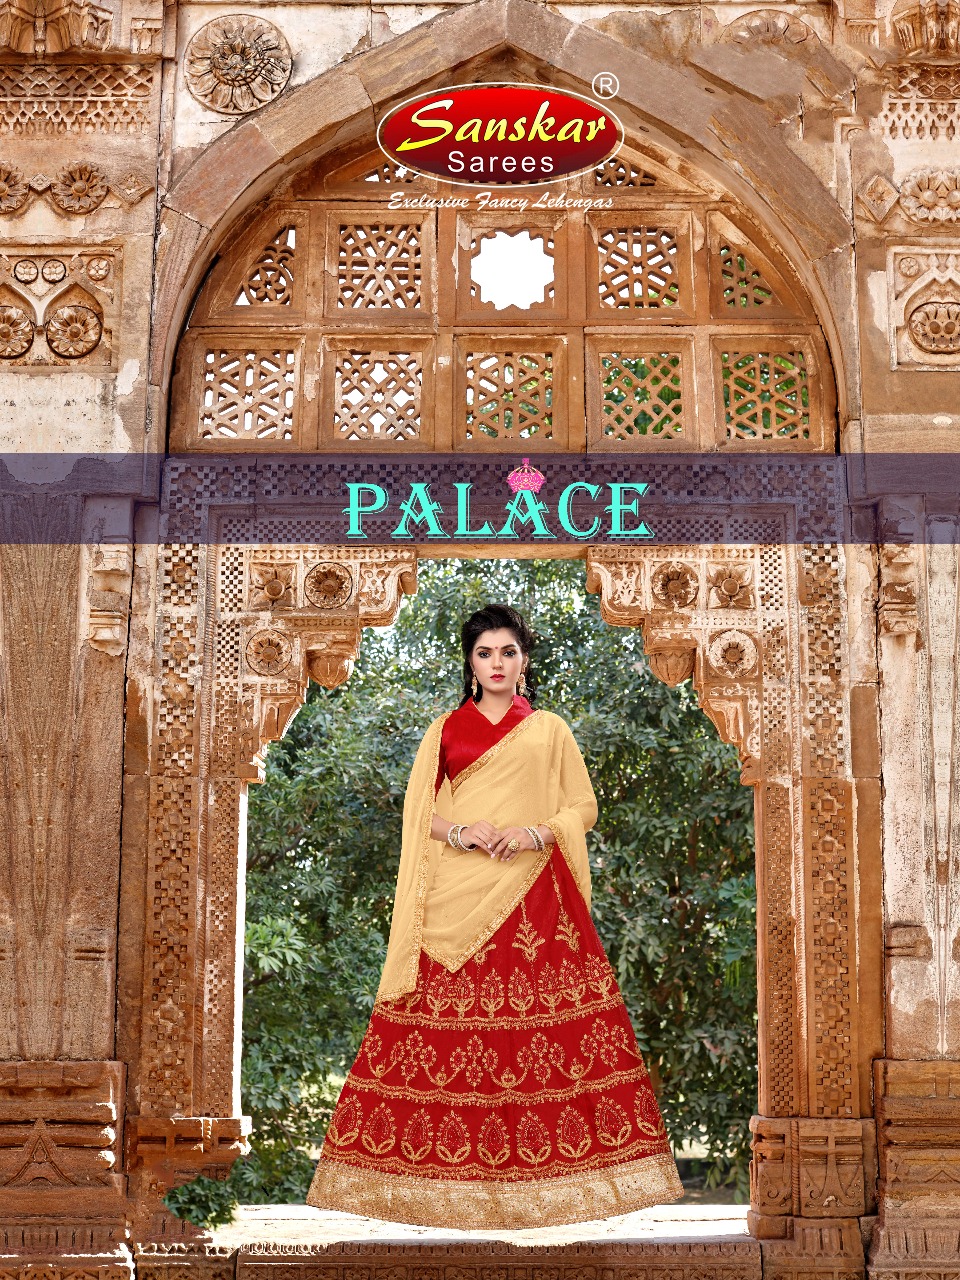 Sanskar sarees presents palace Traditional wear lehenga concept